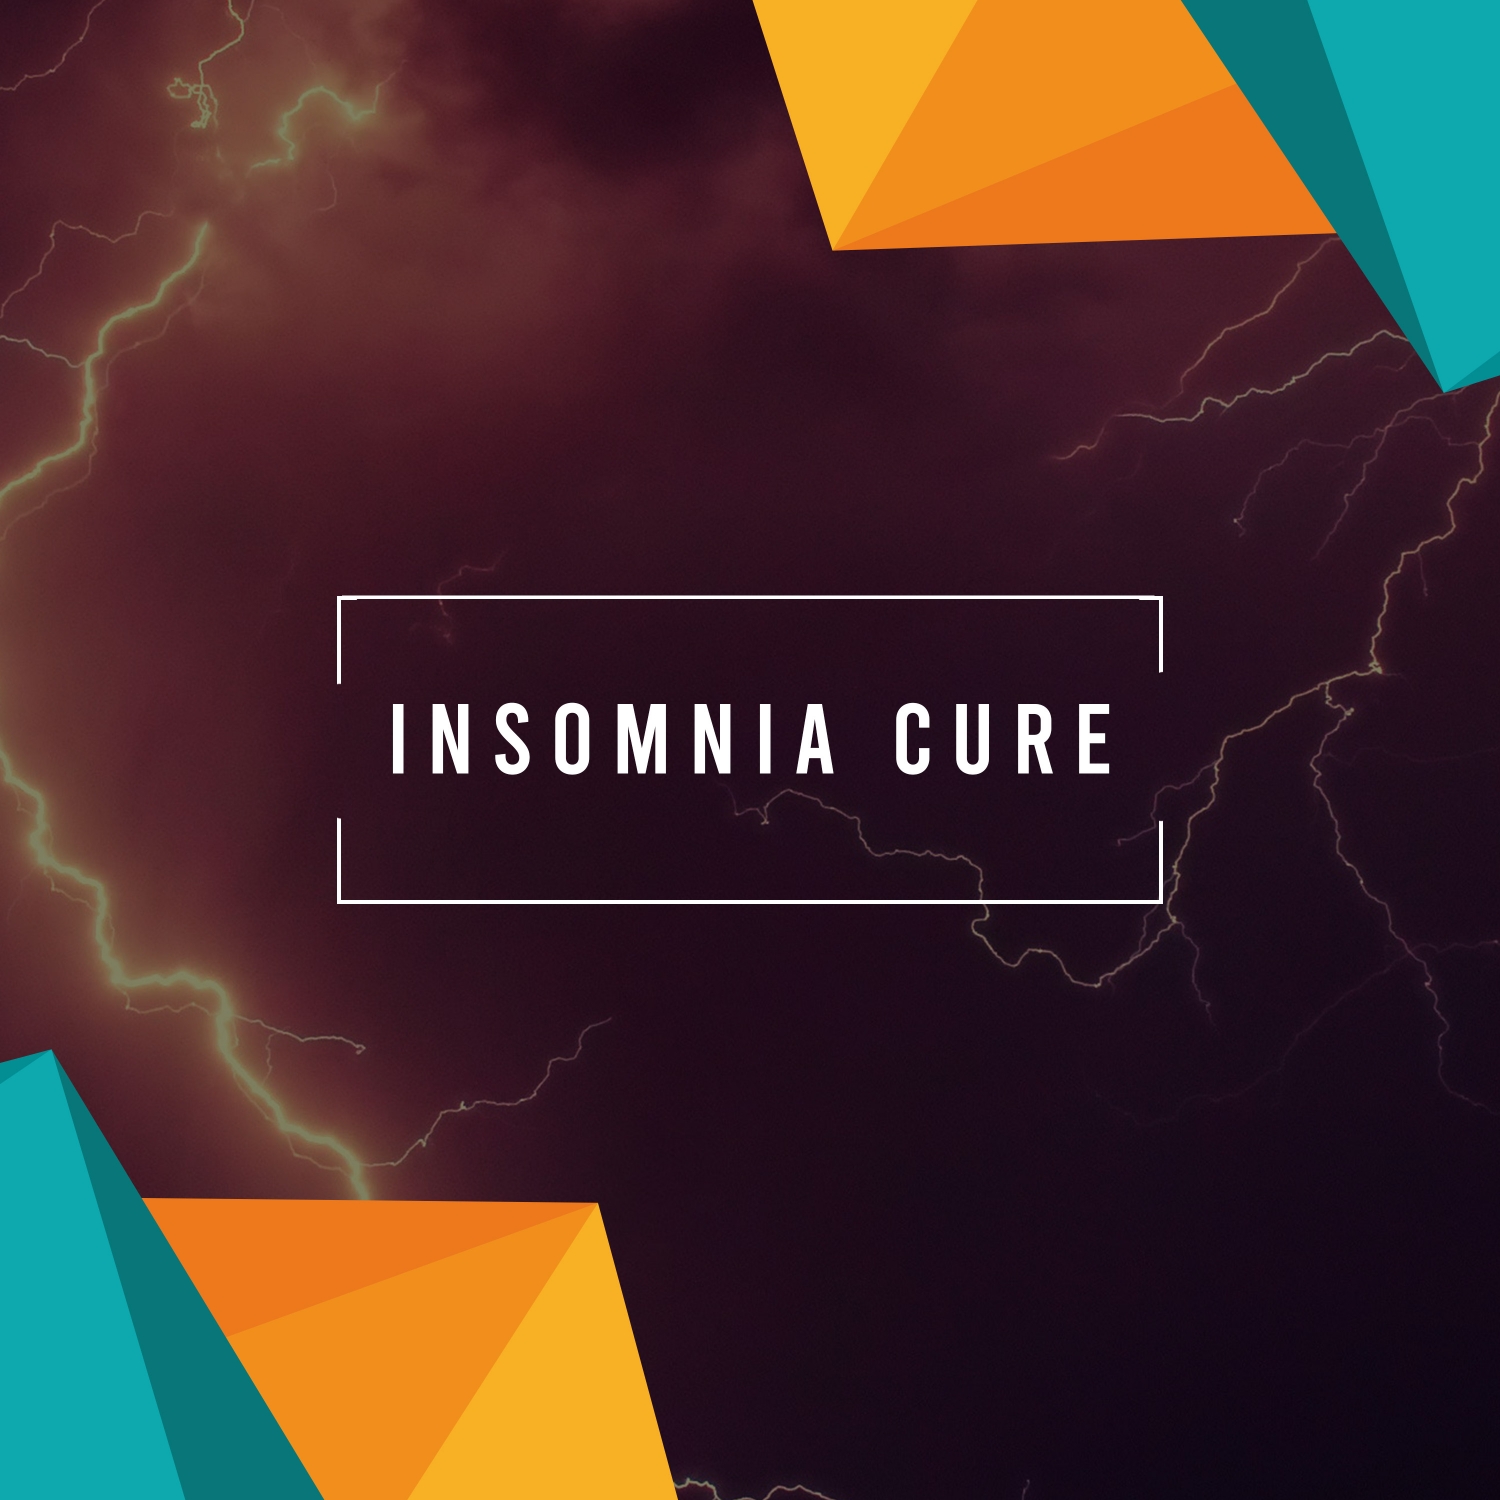 An Insomnia Cure - Natural, Peaceful Rain Sounds. Loopable, White Noise Sleep Aid